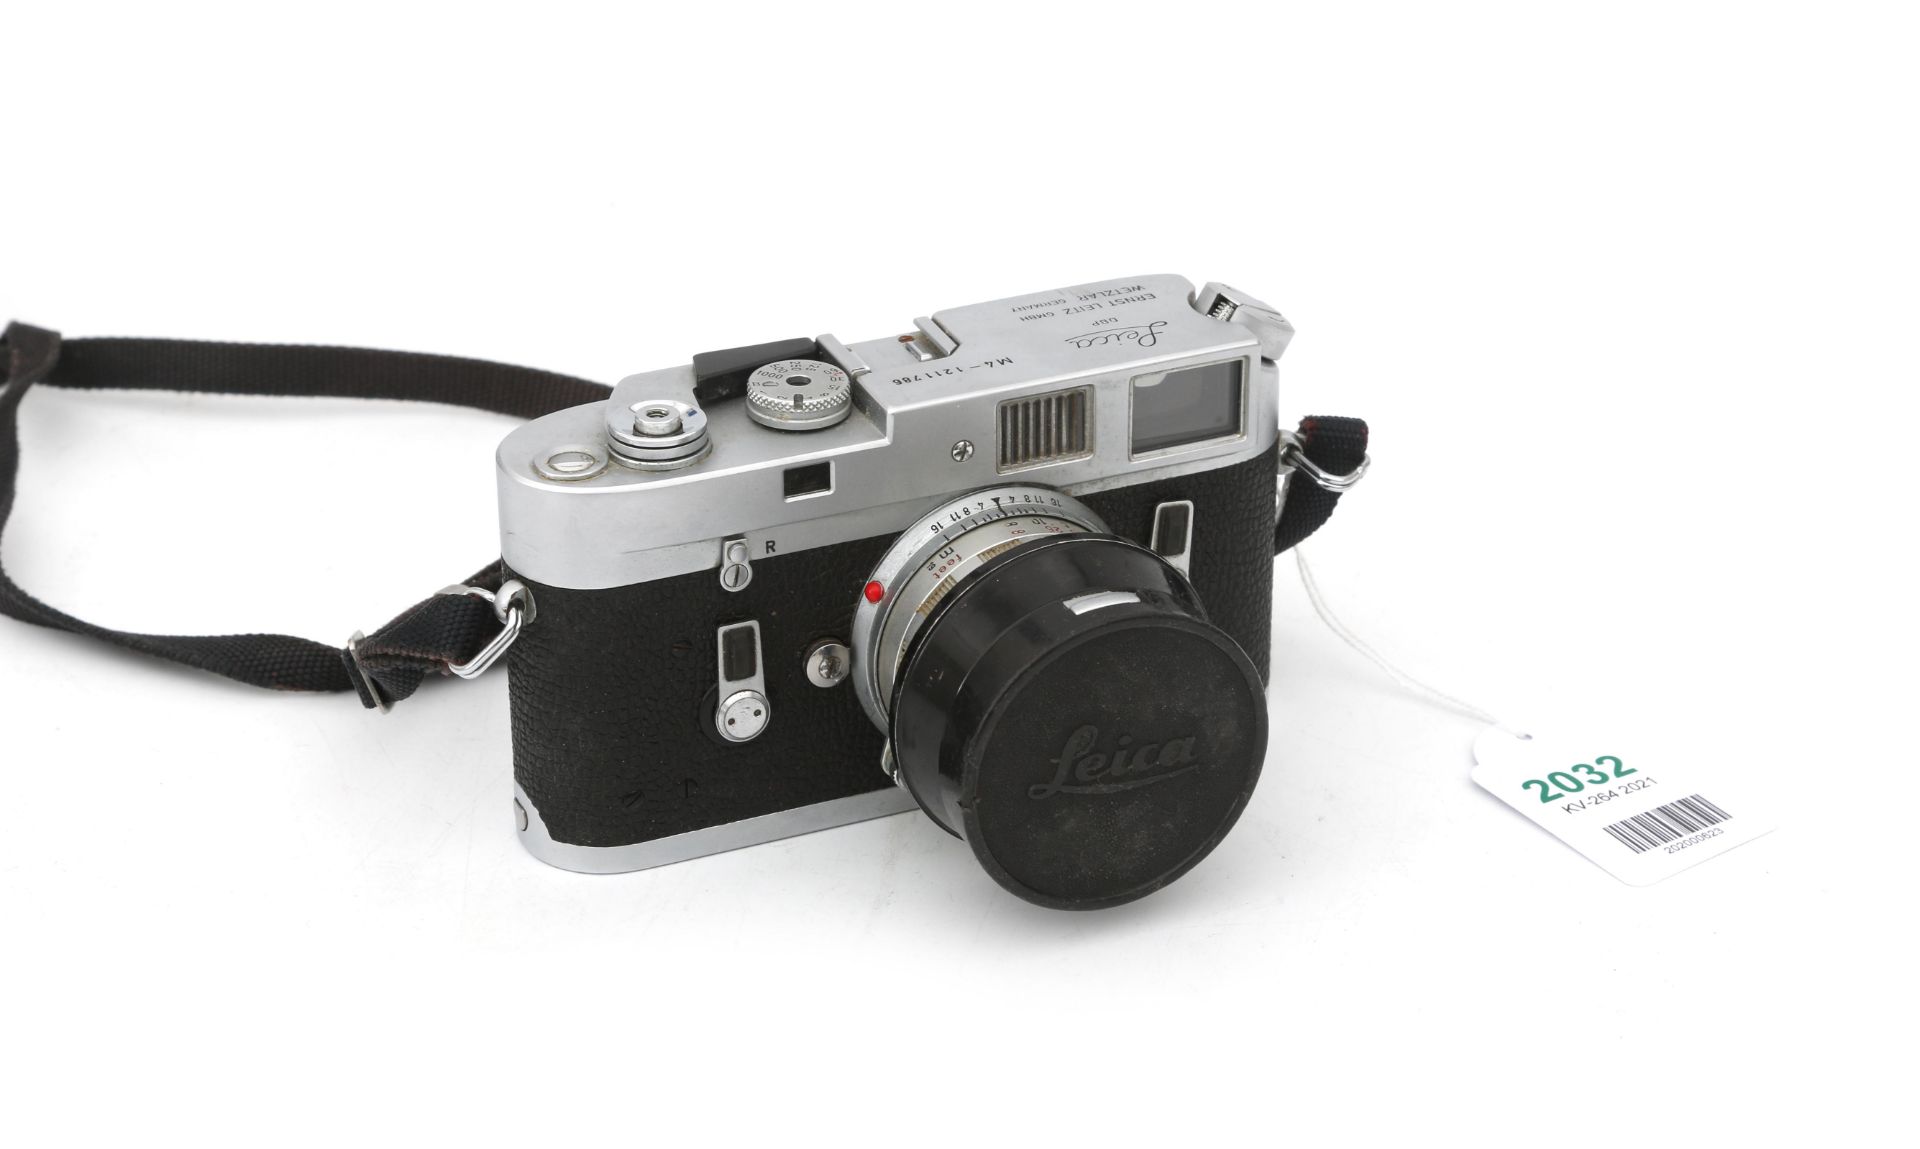 A Leica M4 camera body with Leitz Wetzlar Summicron 1:2/50 lens